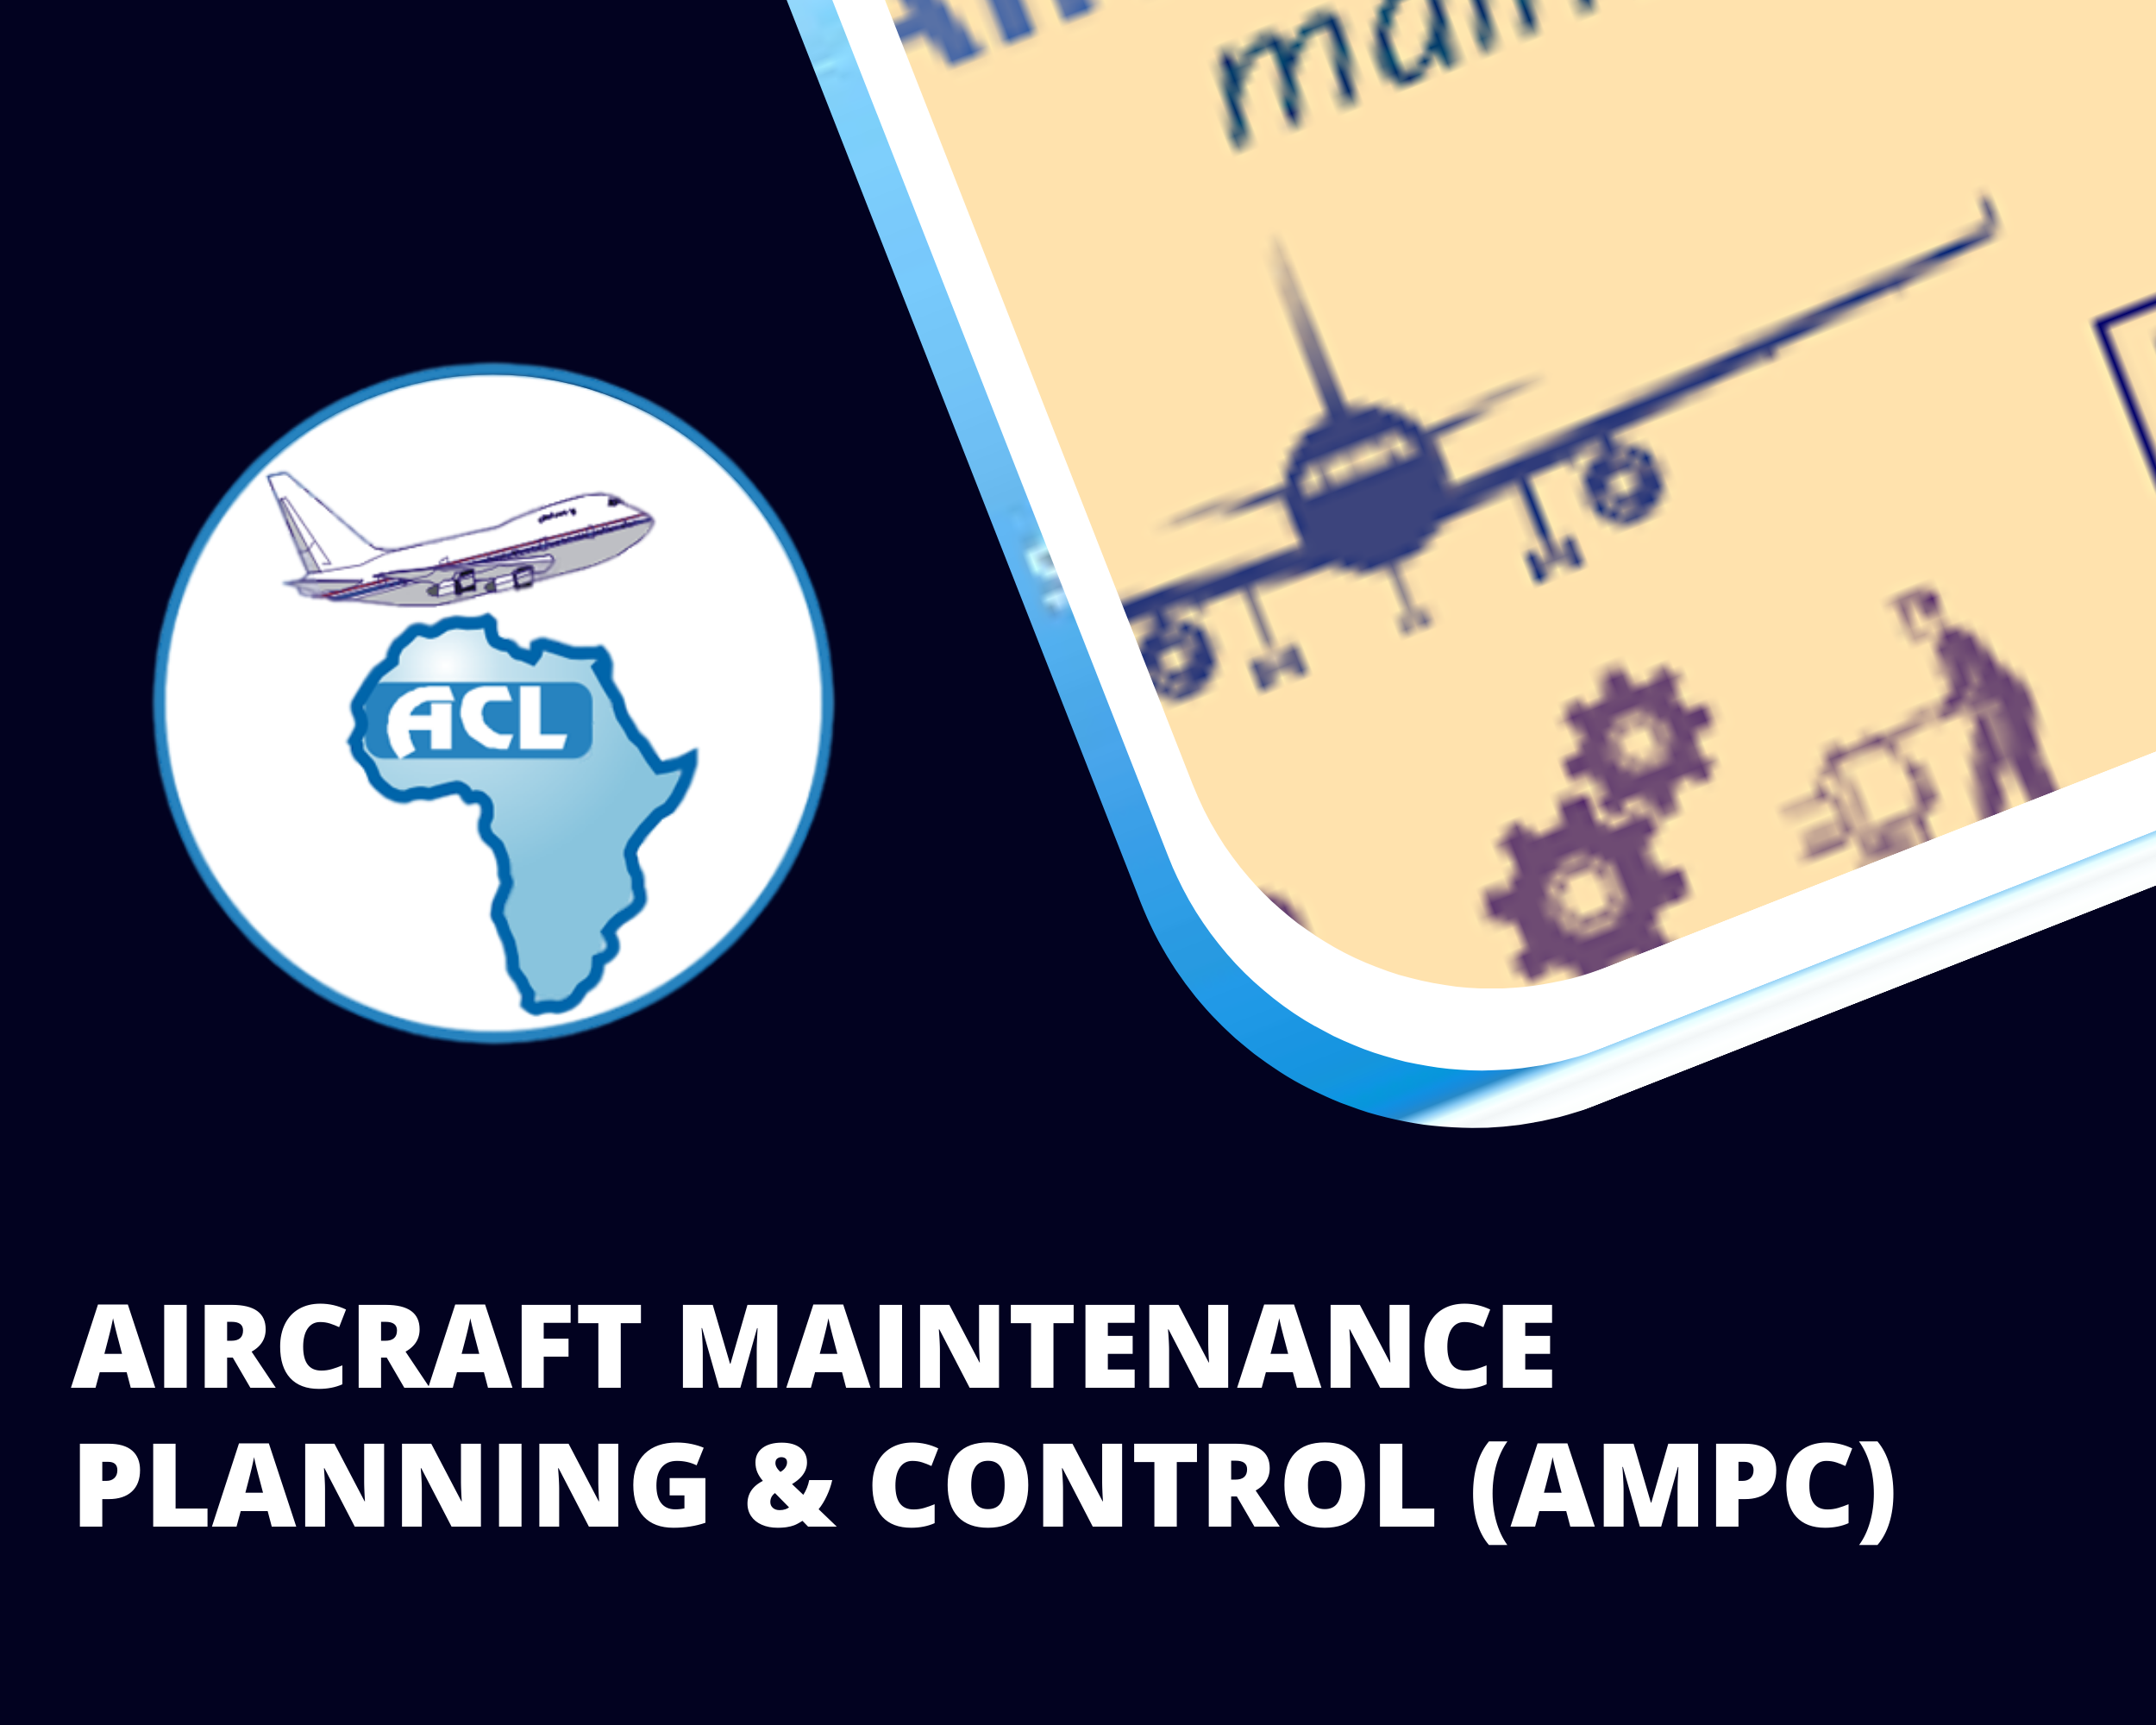 AIRCRAFT MAINTENANCE PLANNING & CONTROL (AMPC)